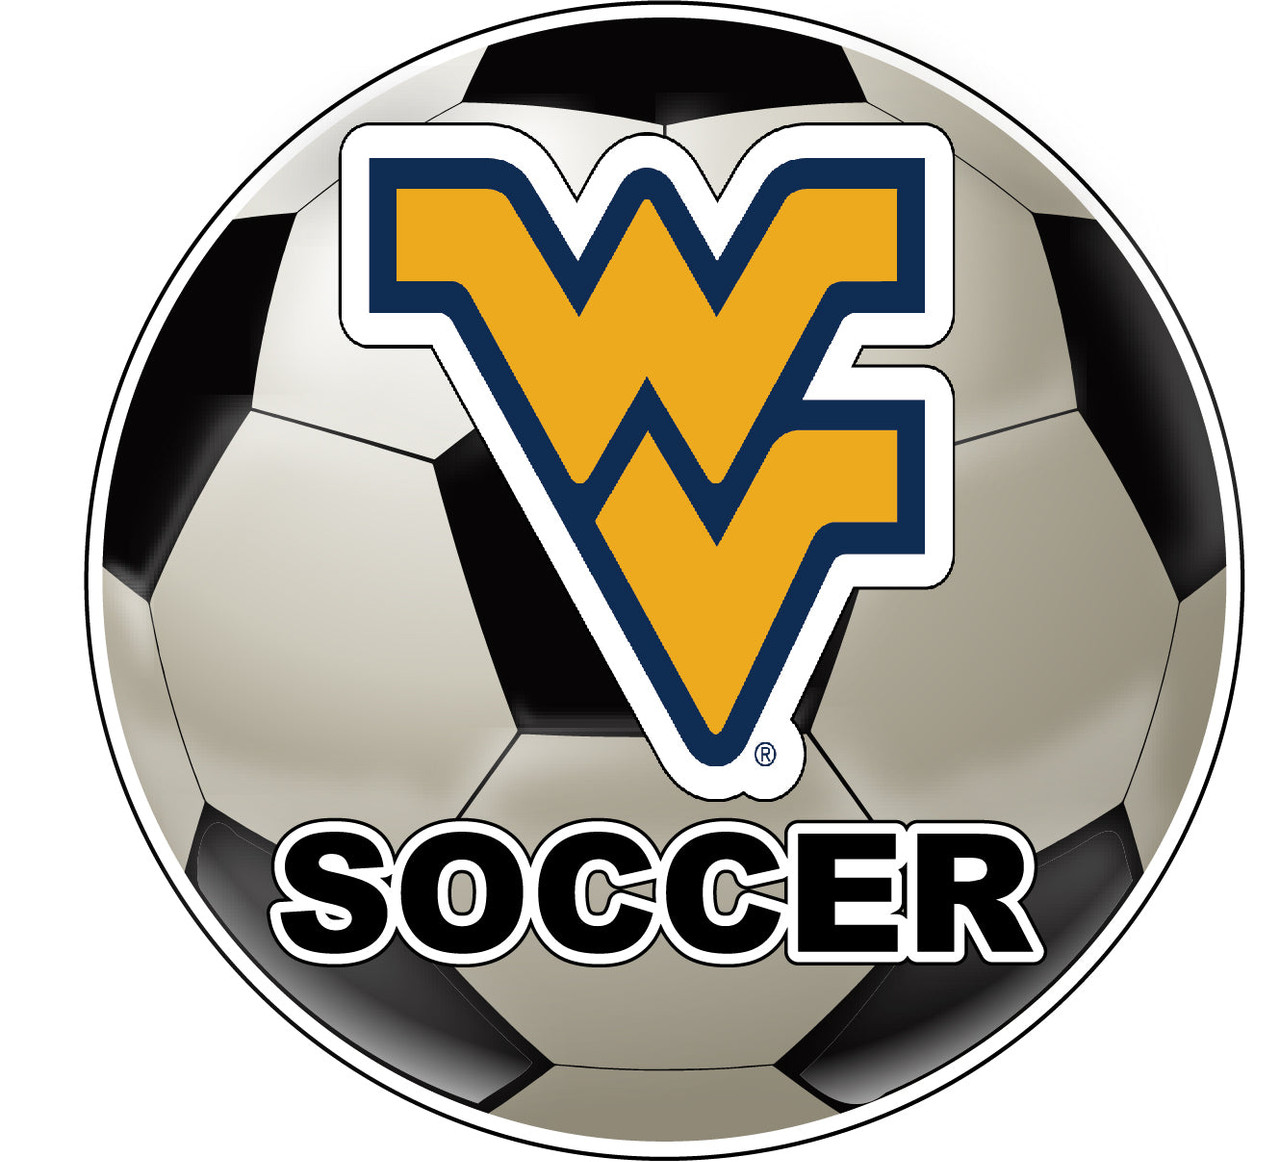 West Virginia Mountaineers 4-Inch Round Soccer Ball Vinyl Decal Sticker